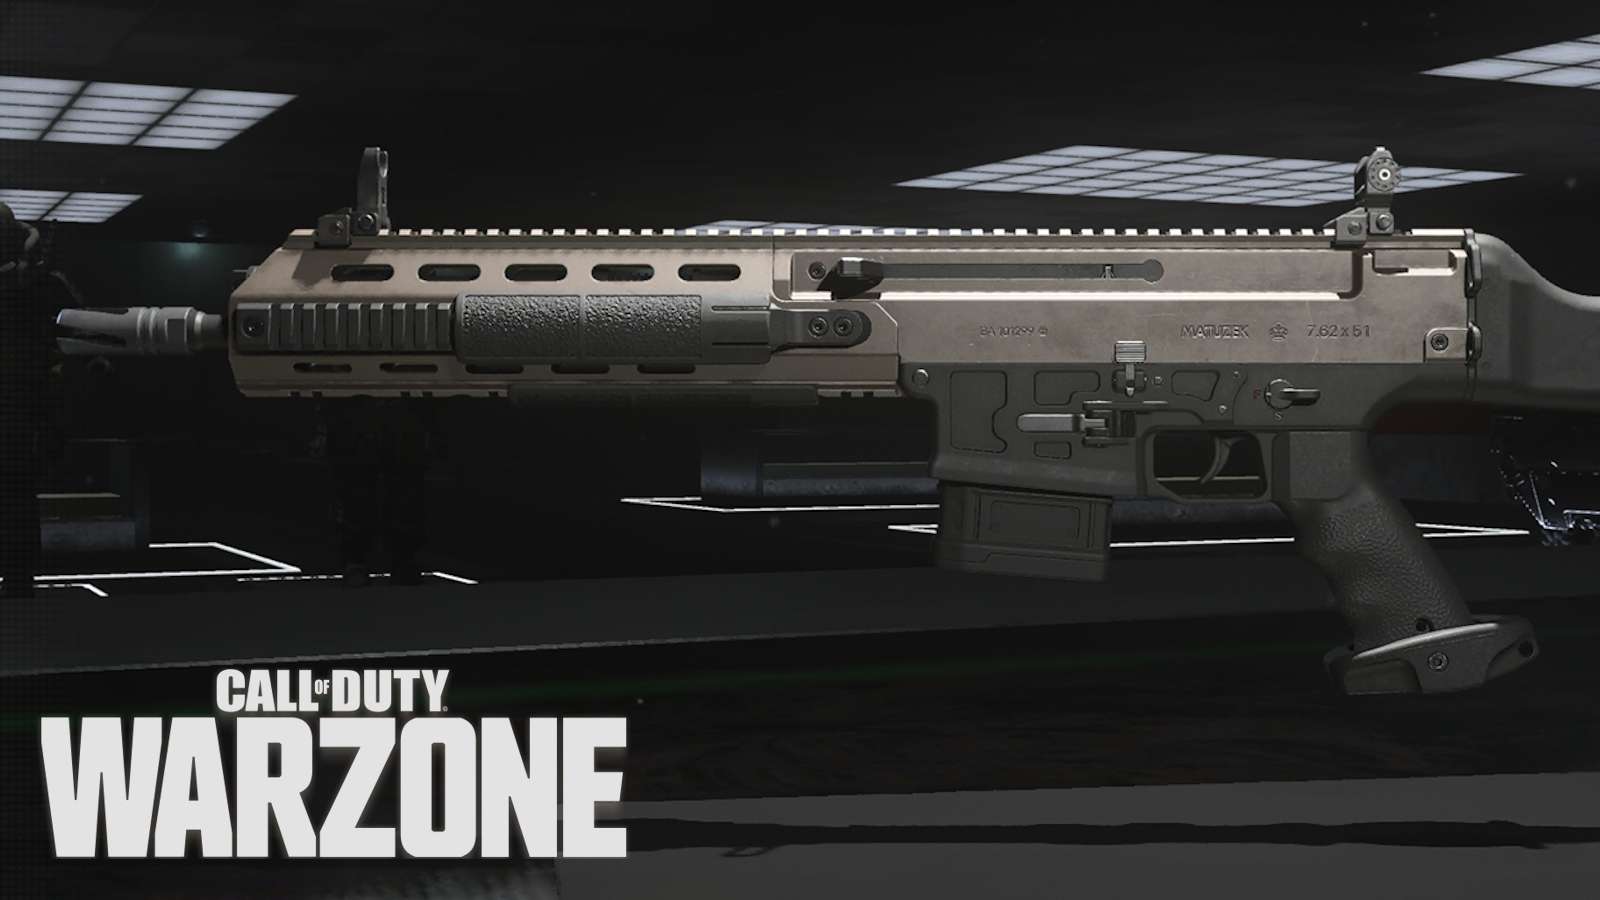 MTZ Interceptor marksman rifle with Warzone logo.